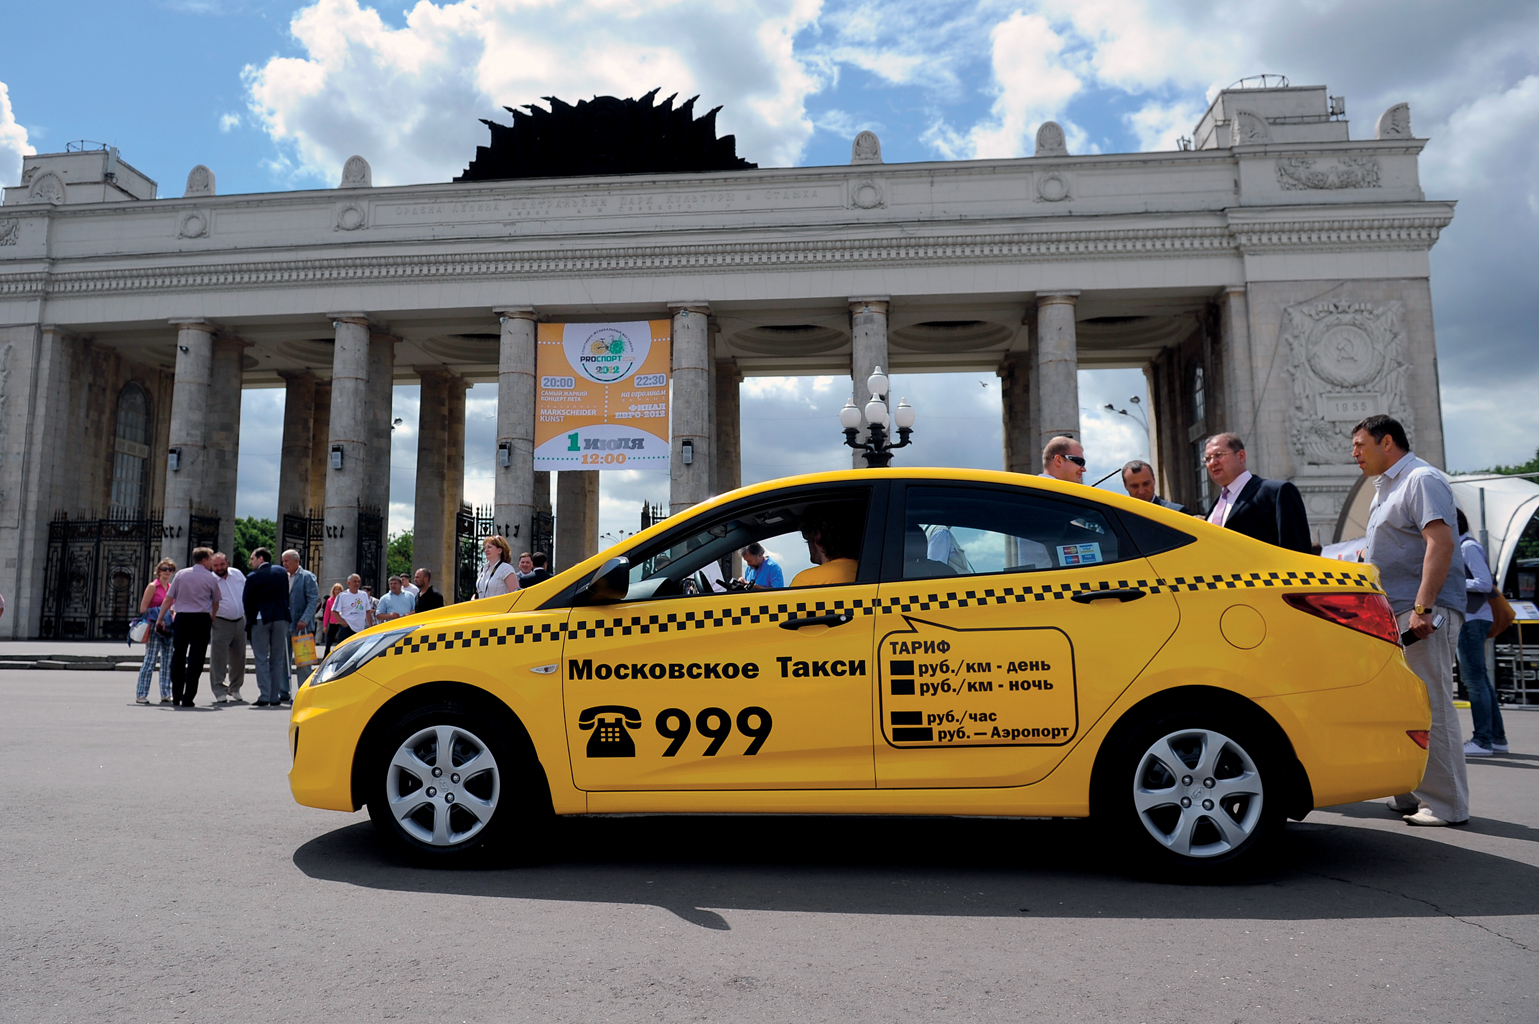 Иви такси. Машина "такси". Таха машина. Автомобиль «такси». Желтое такси.